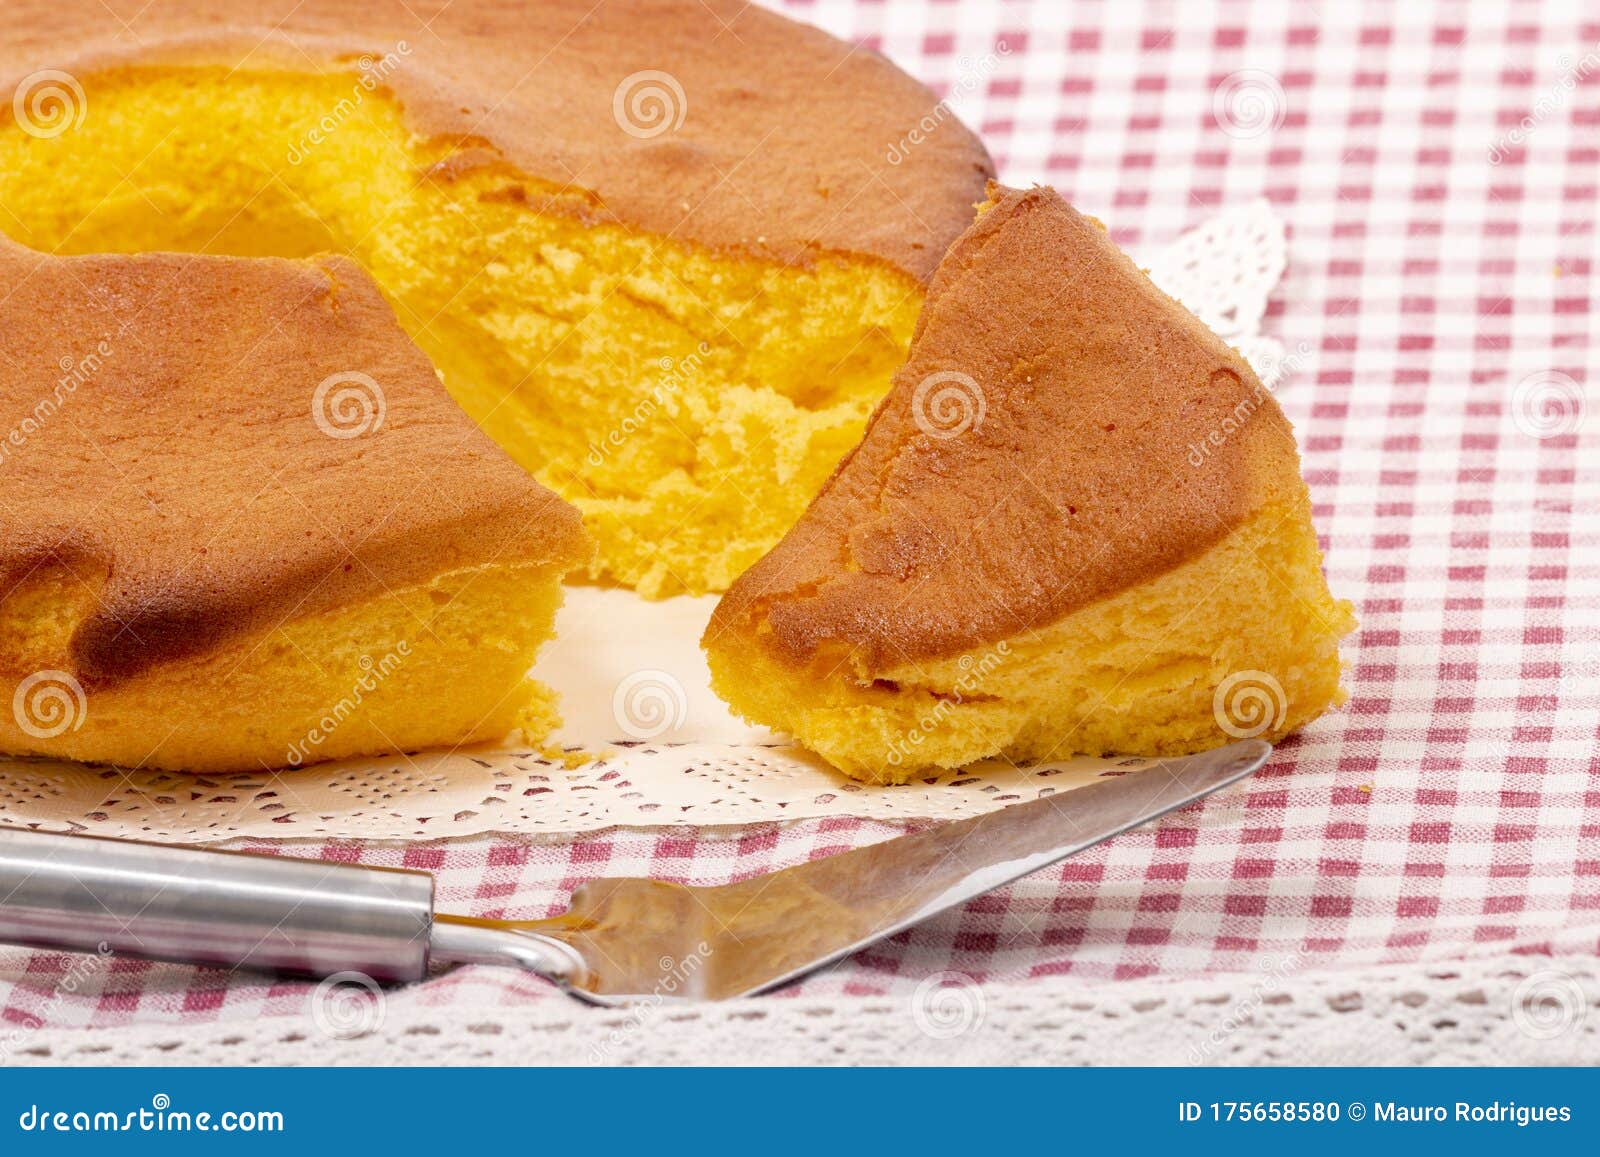 Pao De Lo De Ovar Typical Cake Of Portugal Stock Photo Image Of Sugar Baked